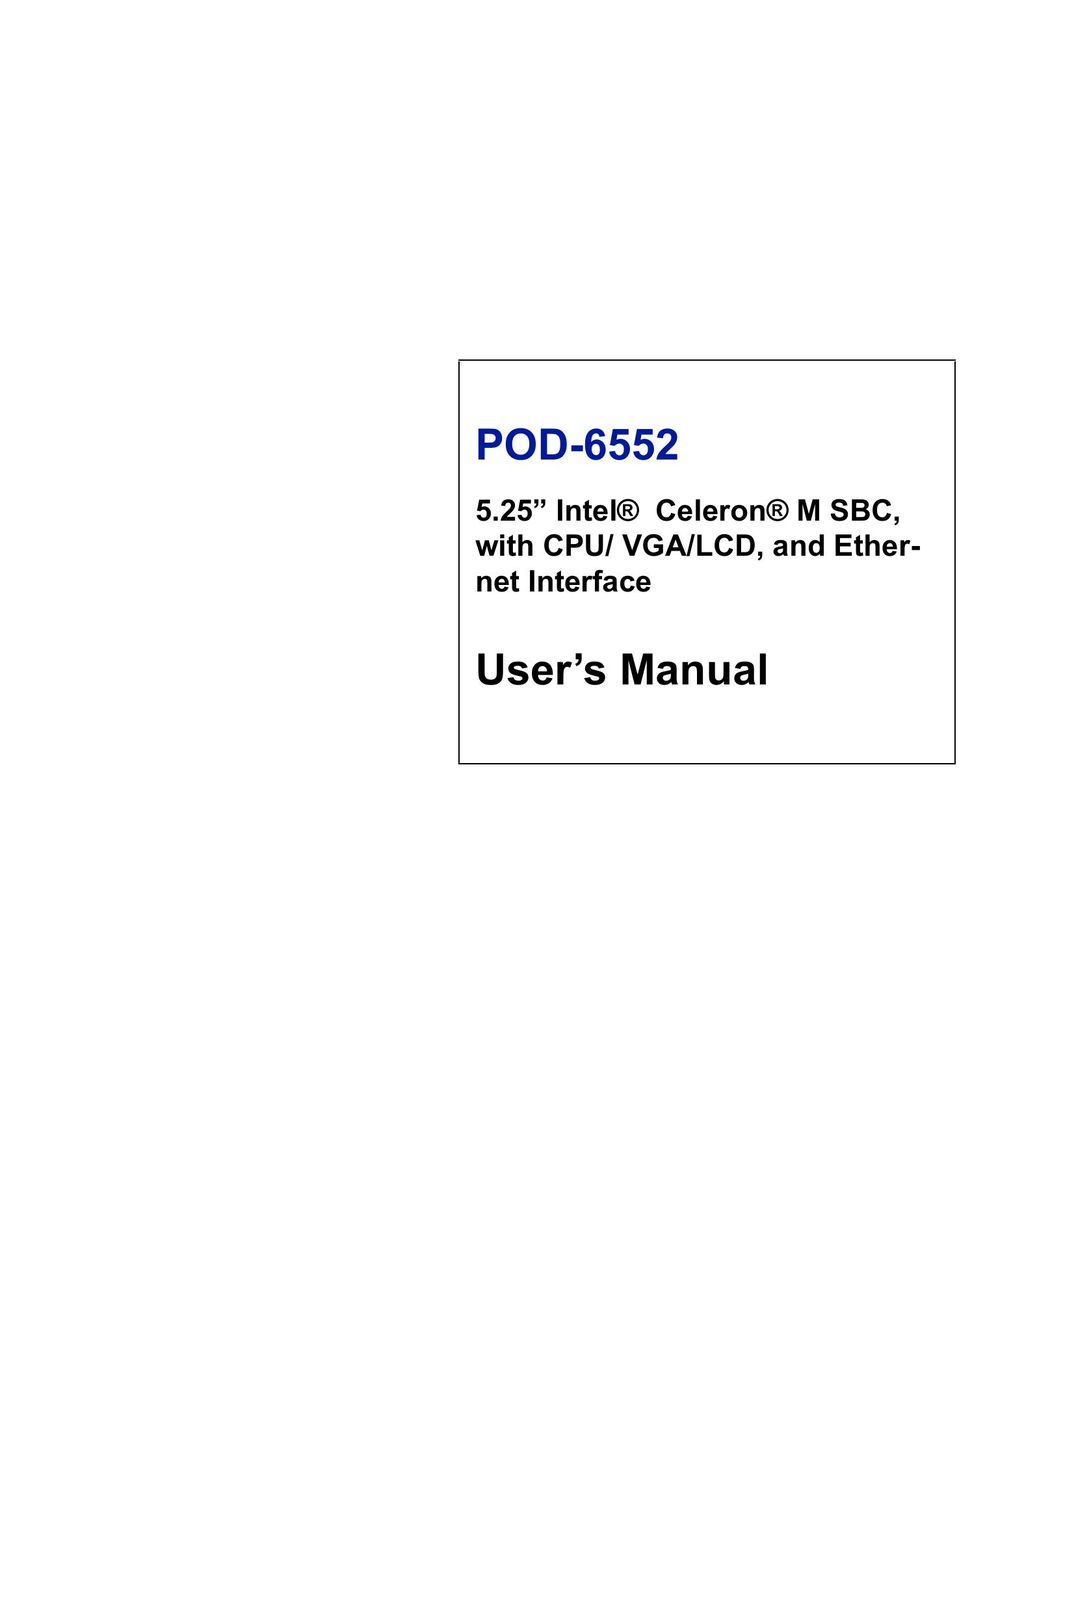 Intel POD-6552 Personal Computer User Manual